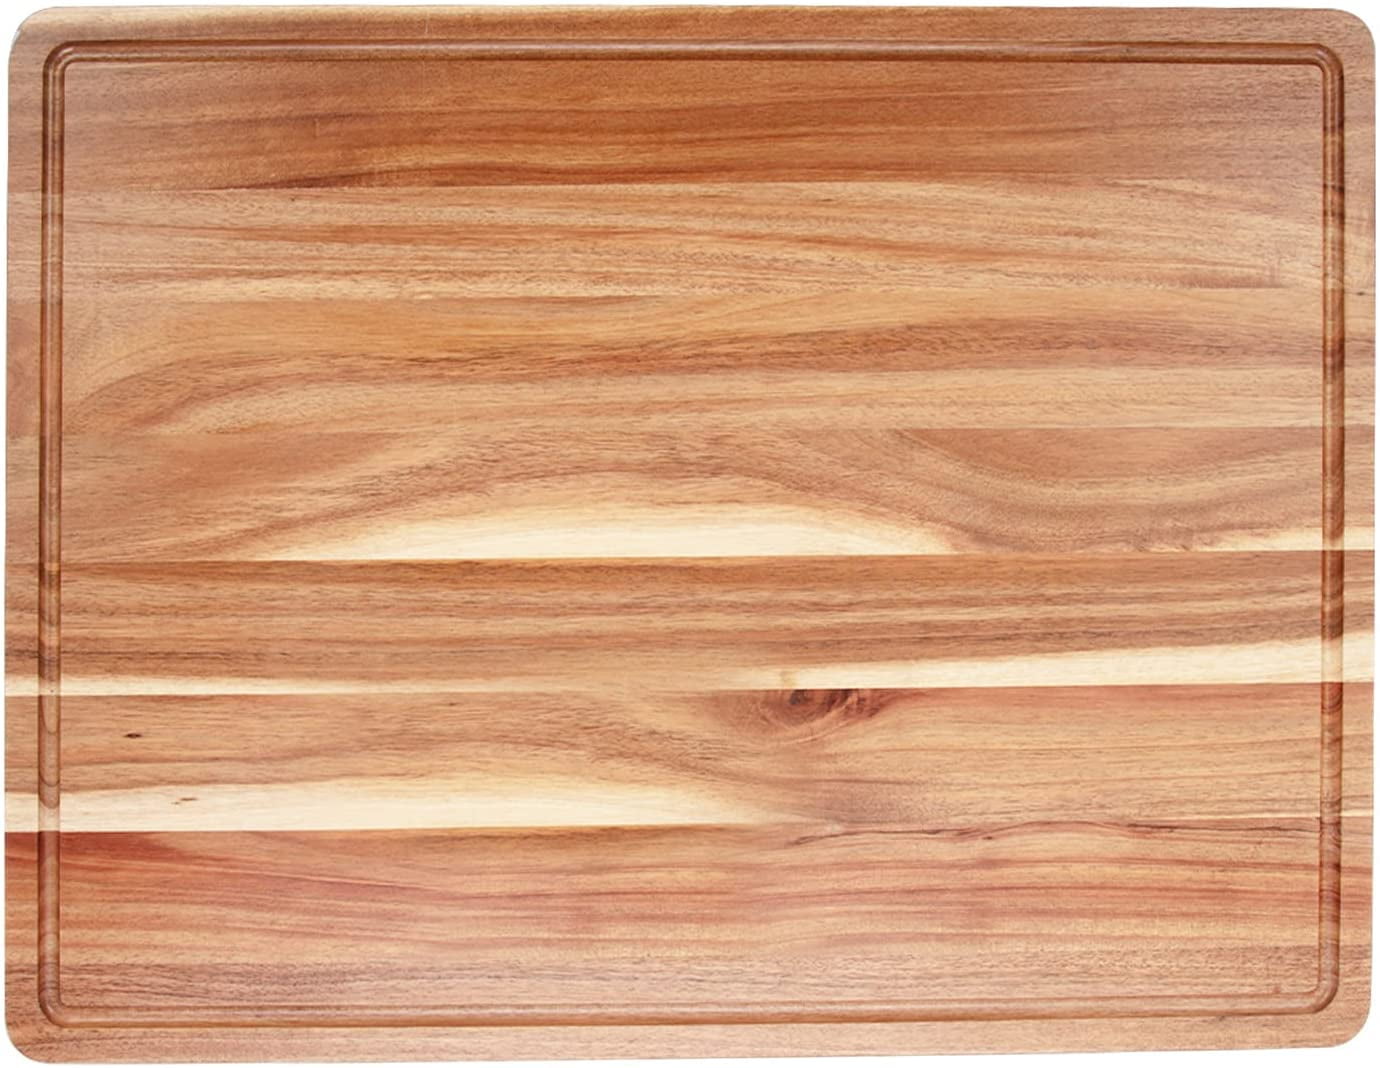 Oak Cutting Board With Tray Large 24x14